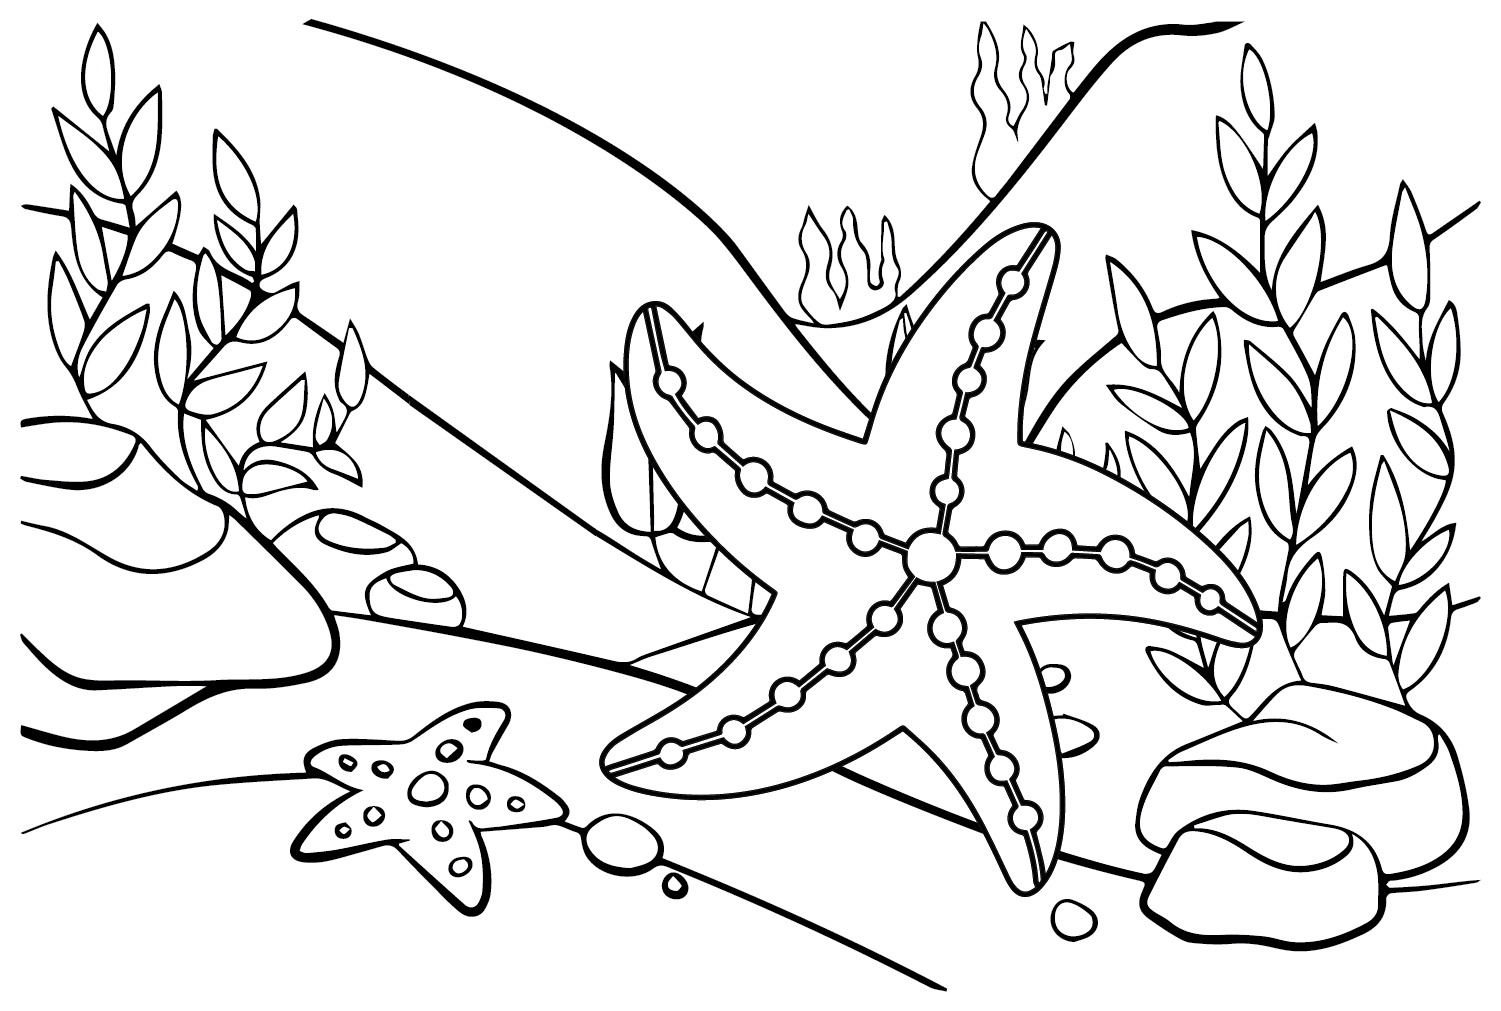 Trazos de estrella de mar de estrella de mar